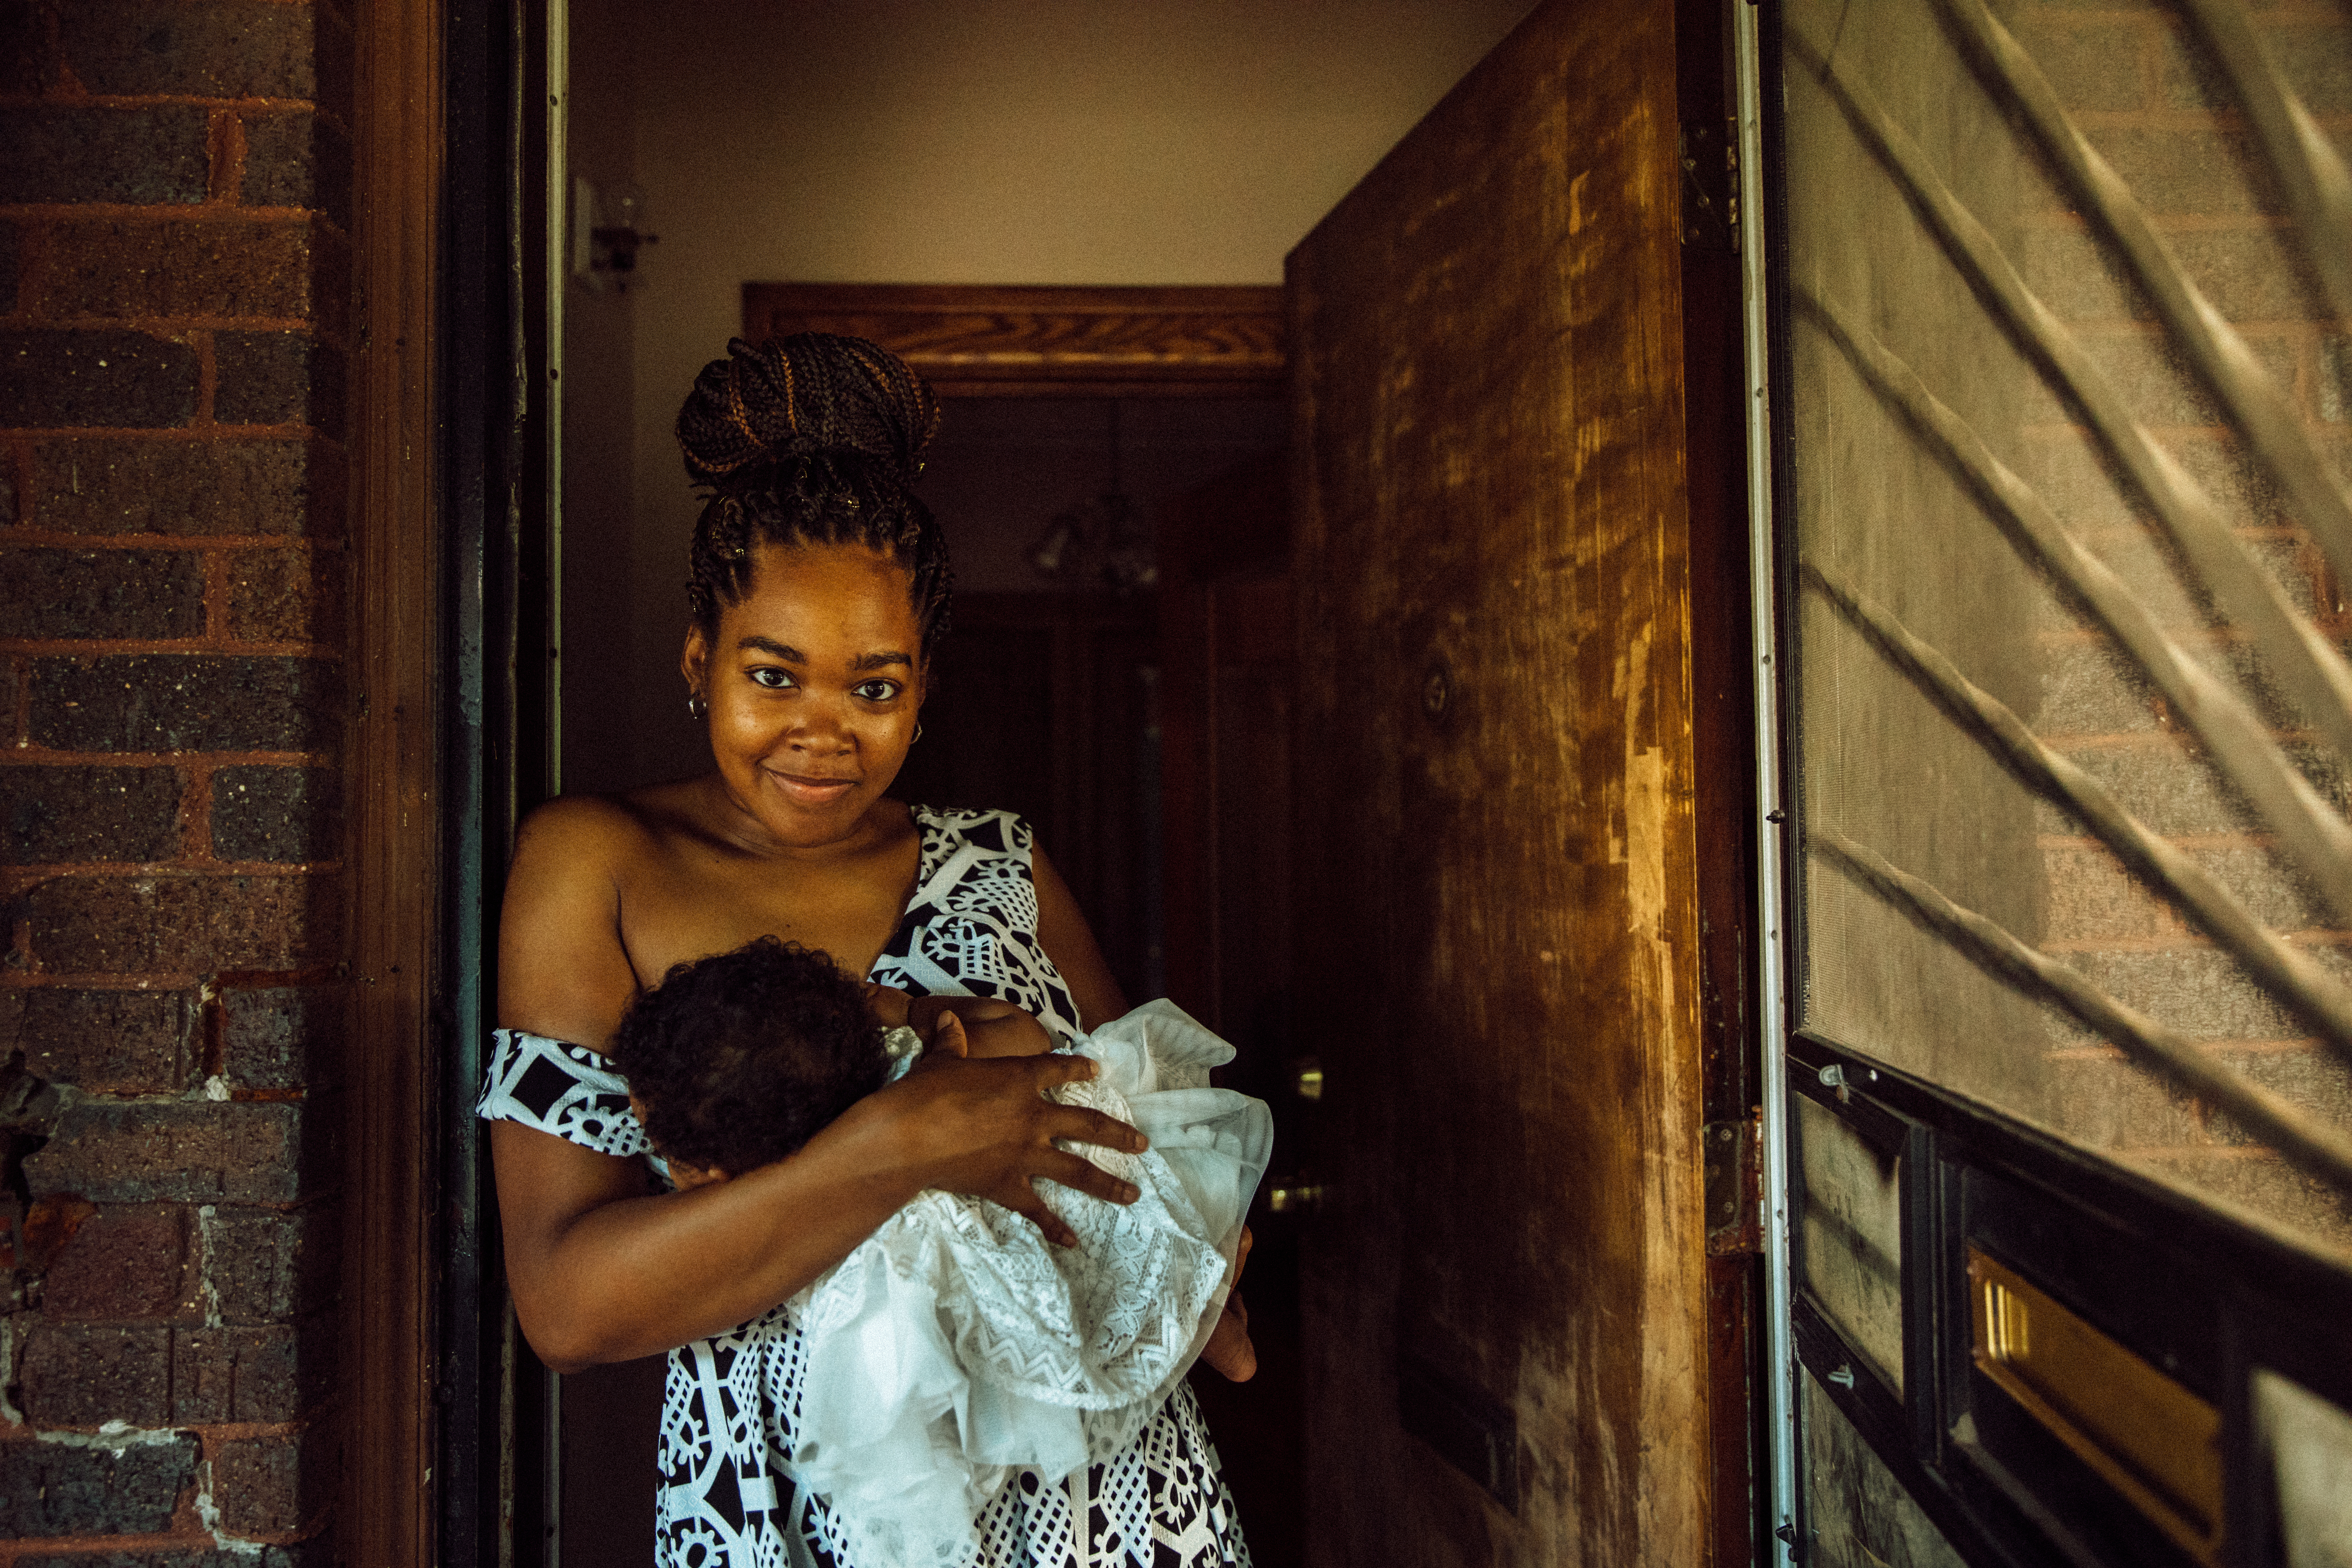 Shardaya Fuquay stands in the doorway of her house, breastfeeding her daughter.